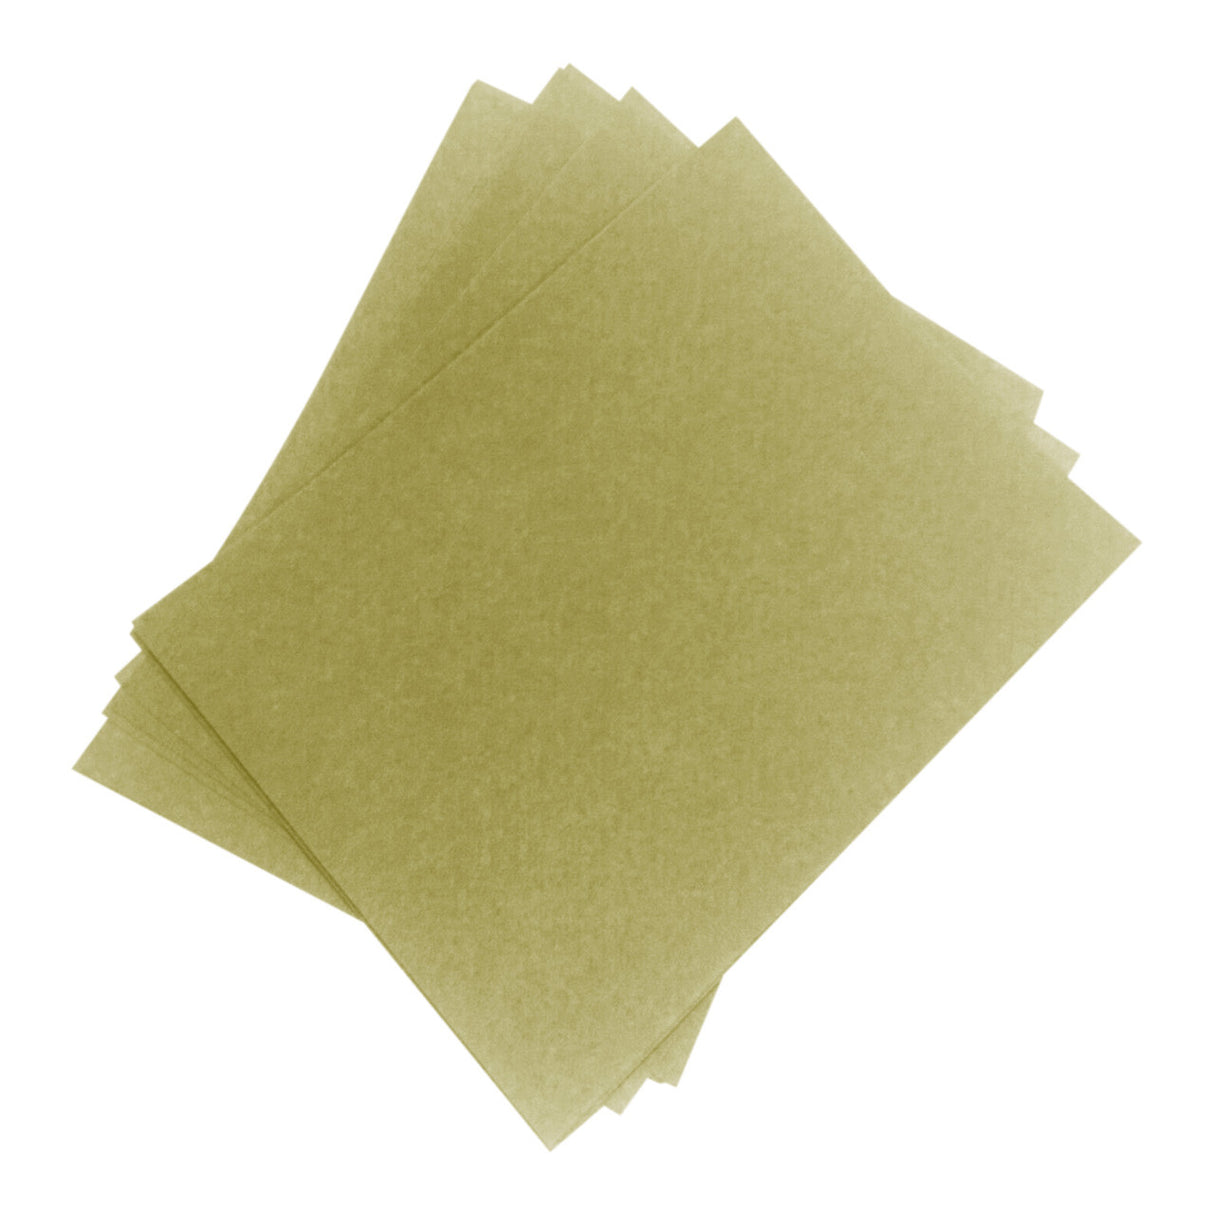 3M™ Wetordry™ Polishing Paper (Pkg. of 5)